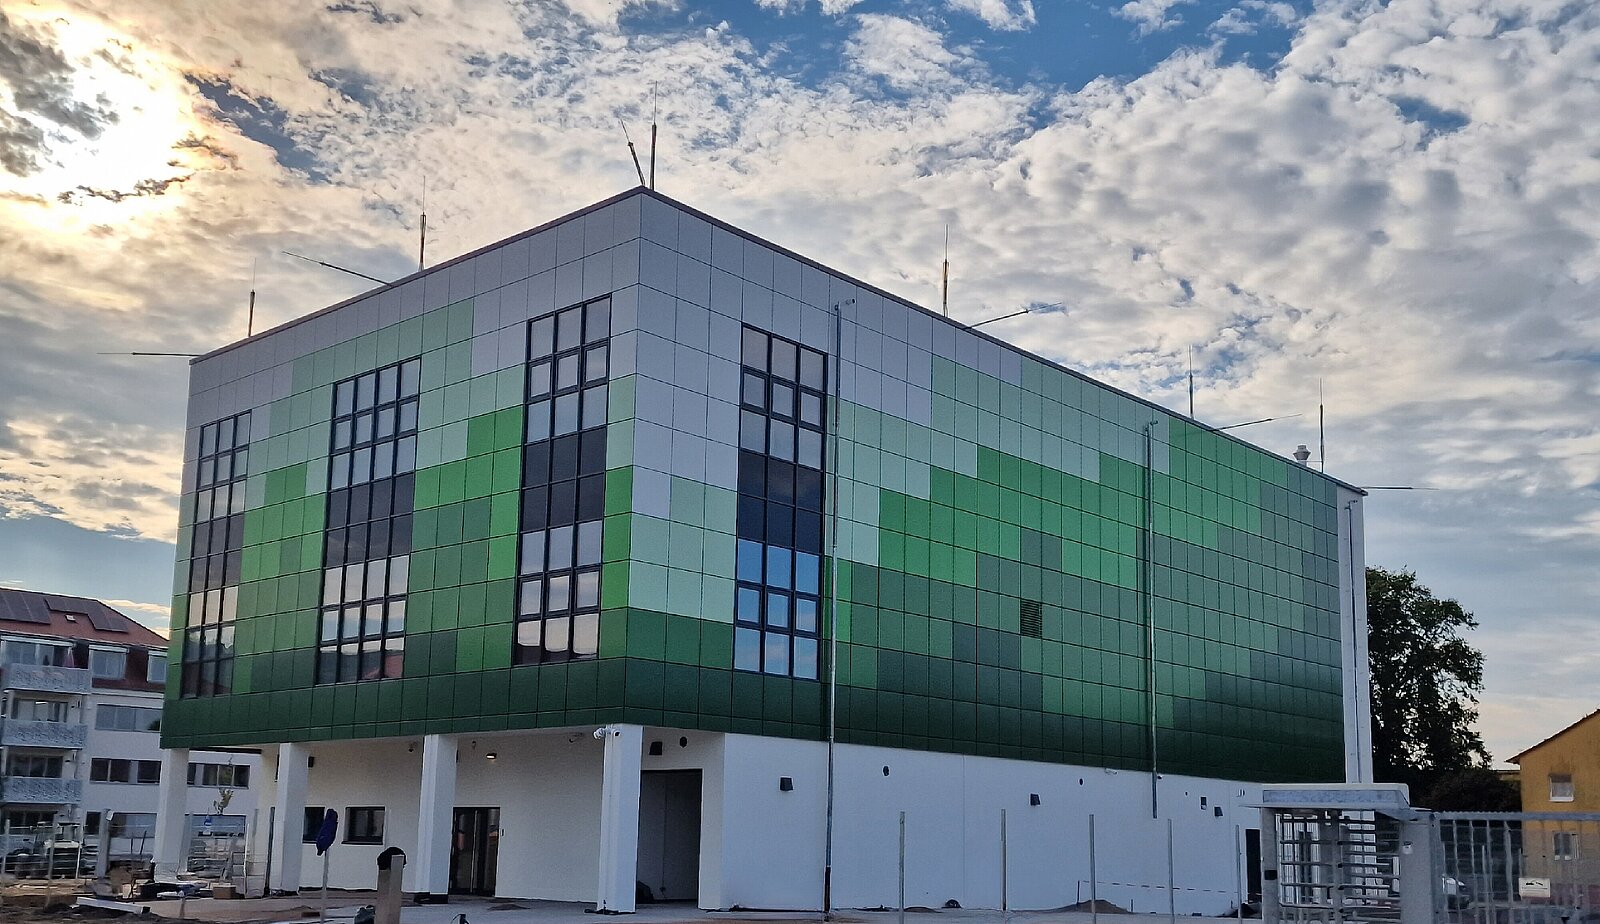 Data centre in Heidelberg with a green façade